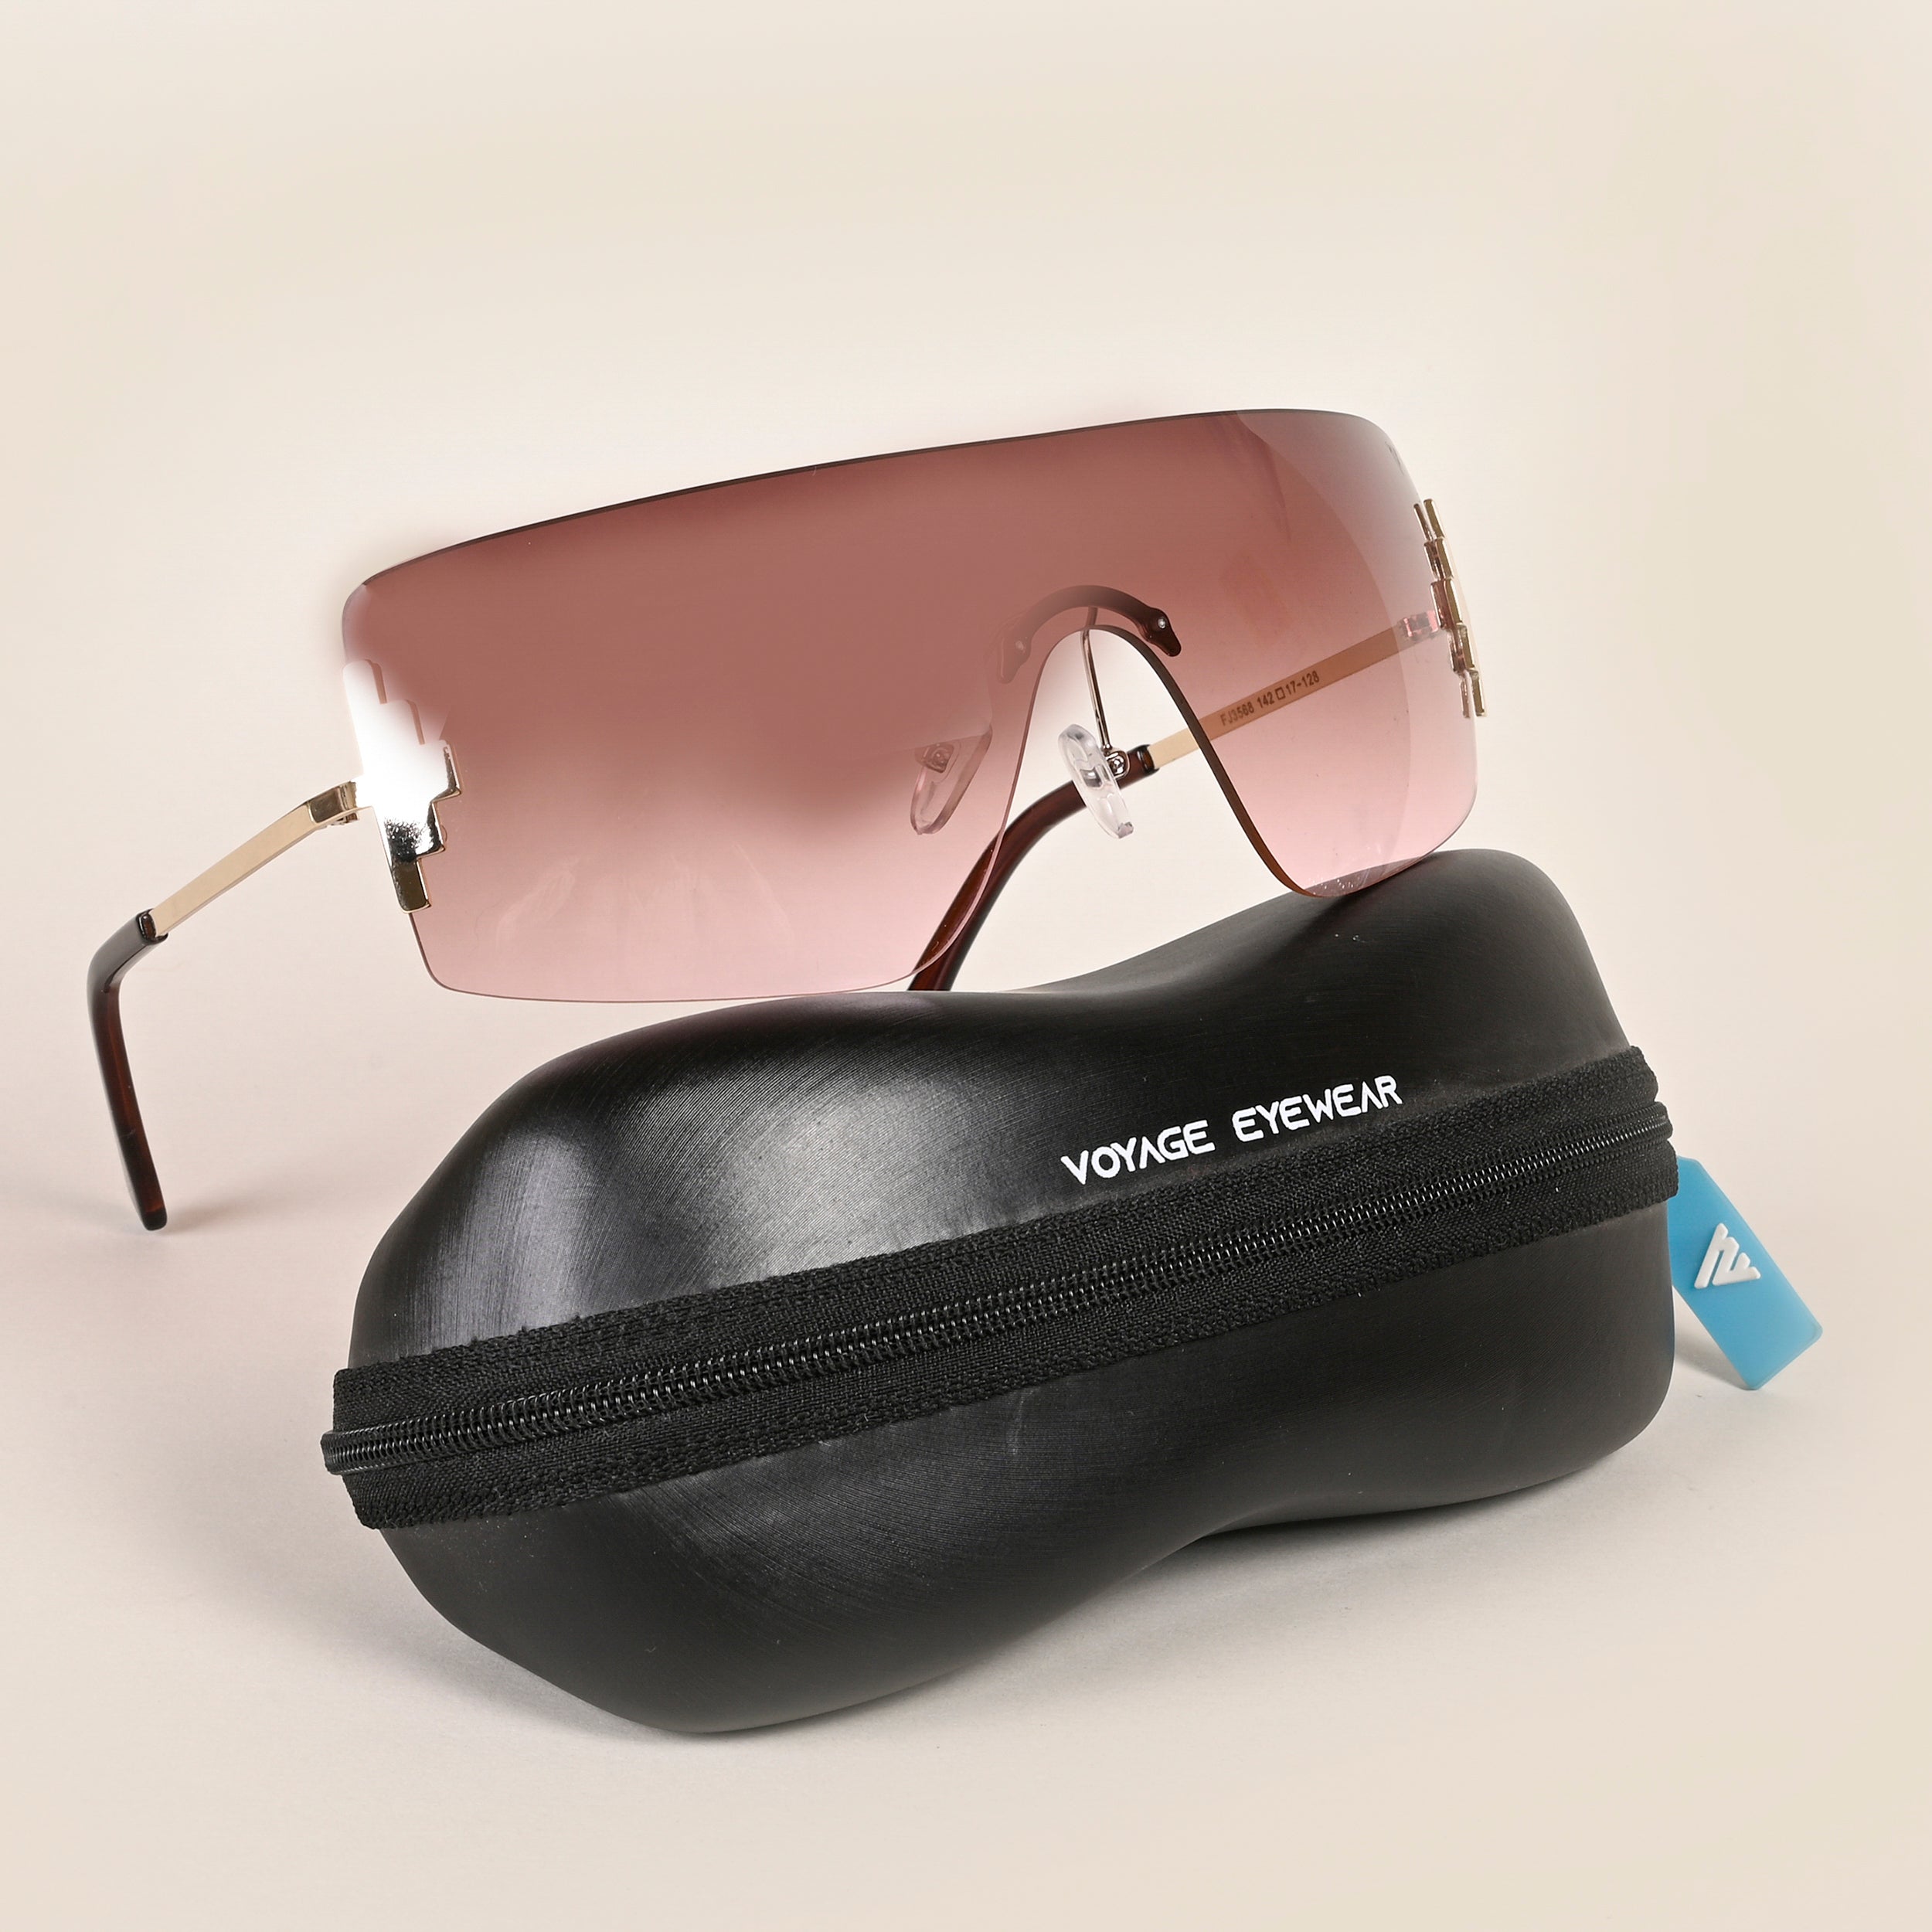 Voyage Brown Wrap Around Sunglasses for Men & Women - MG4120